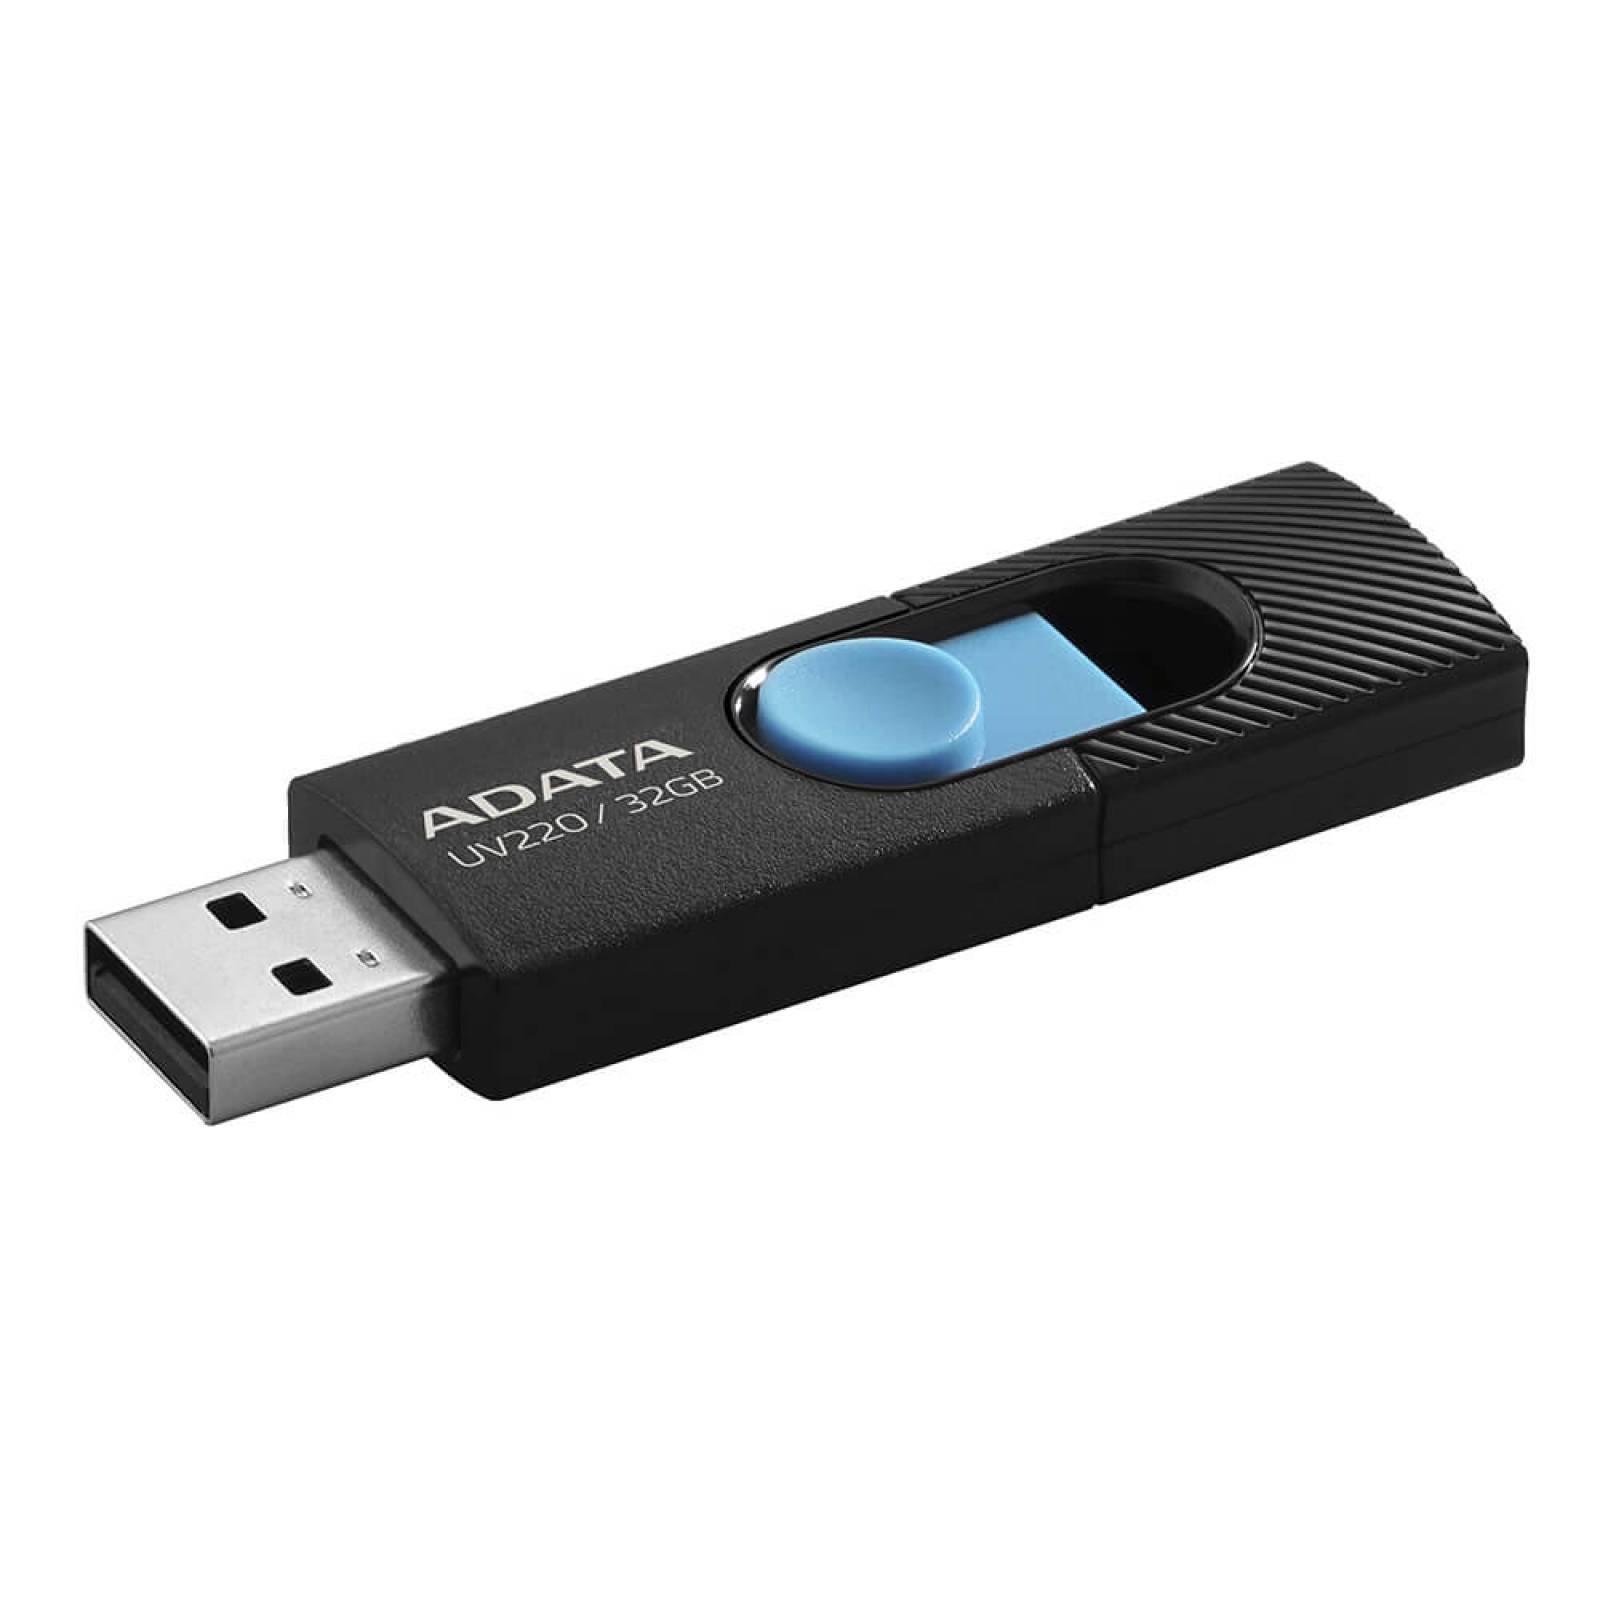 Memoria USB 2.0 Adata UV220 32GB Negro/Azul Deslizante